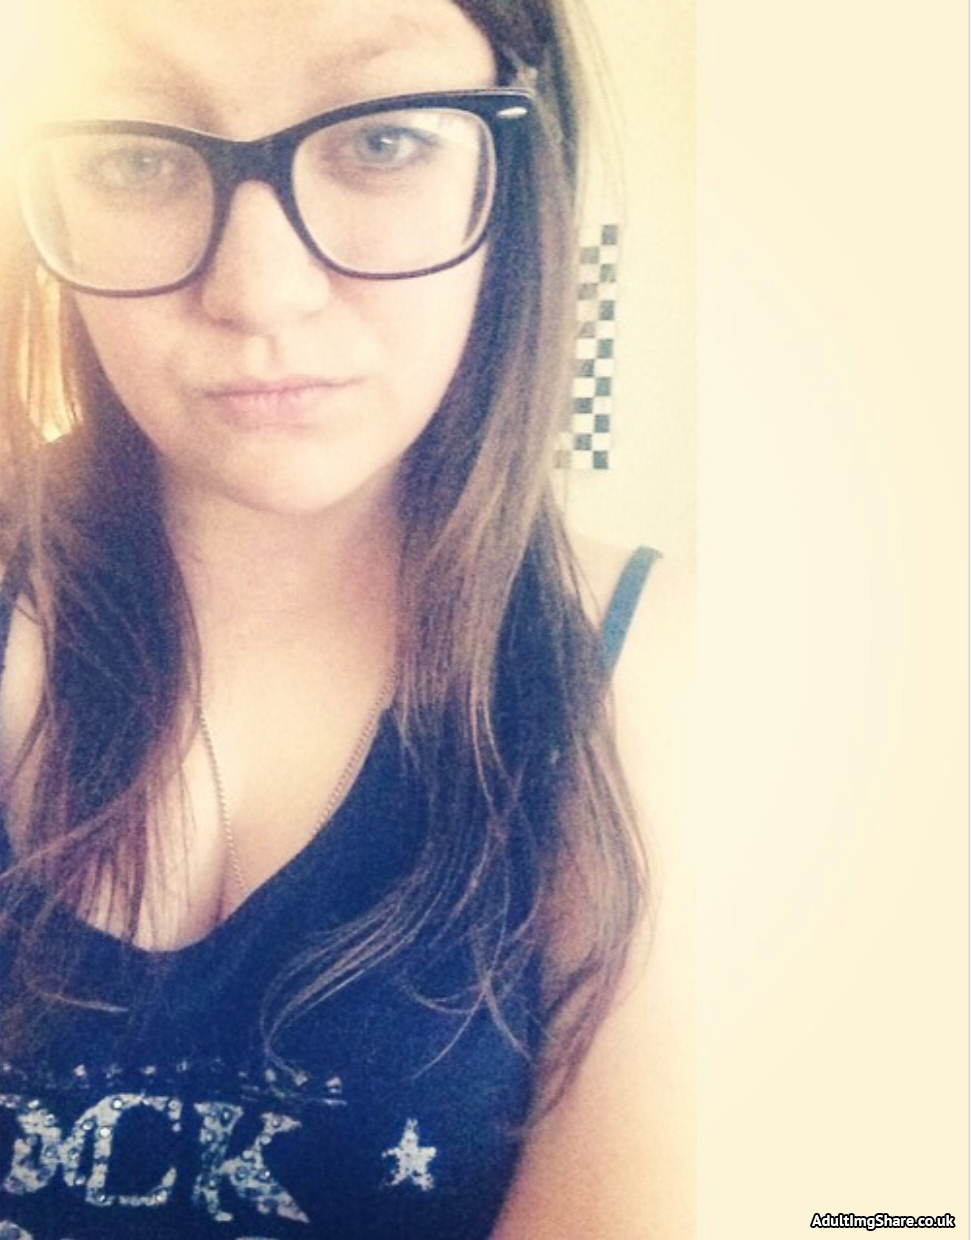 Cute Girl With Glasses Selfie